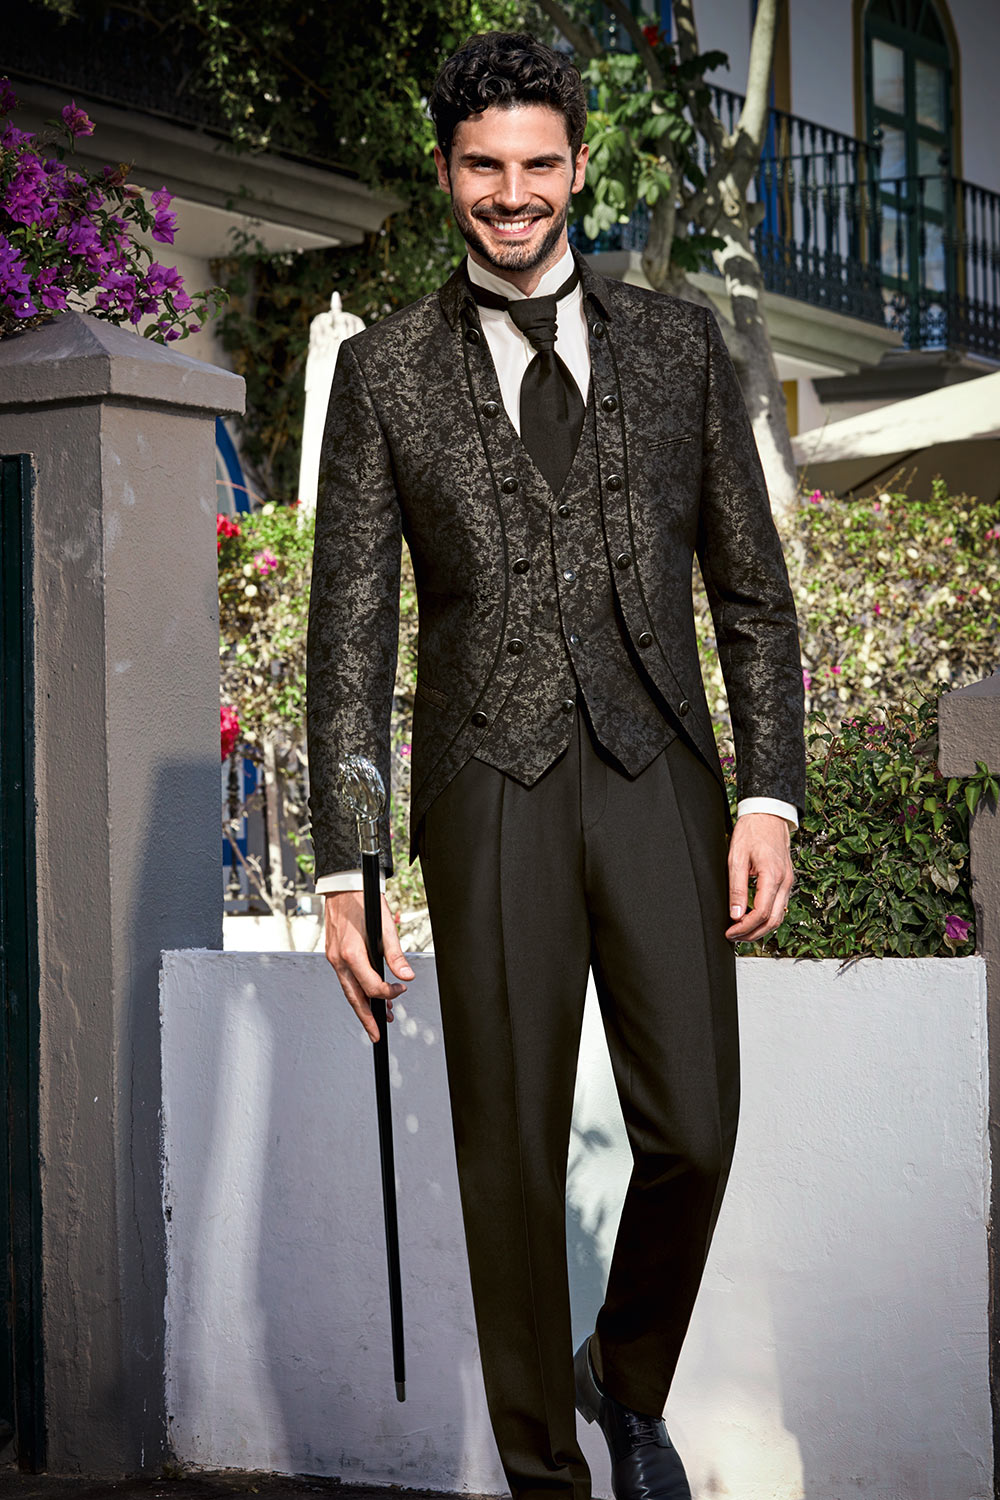 Royal Black Jacquard 3 Piece Wedding Suit - Tom Murphy's Formal and ...